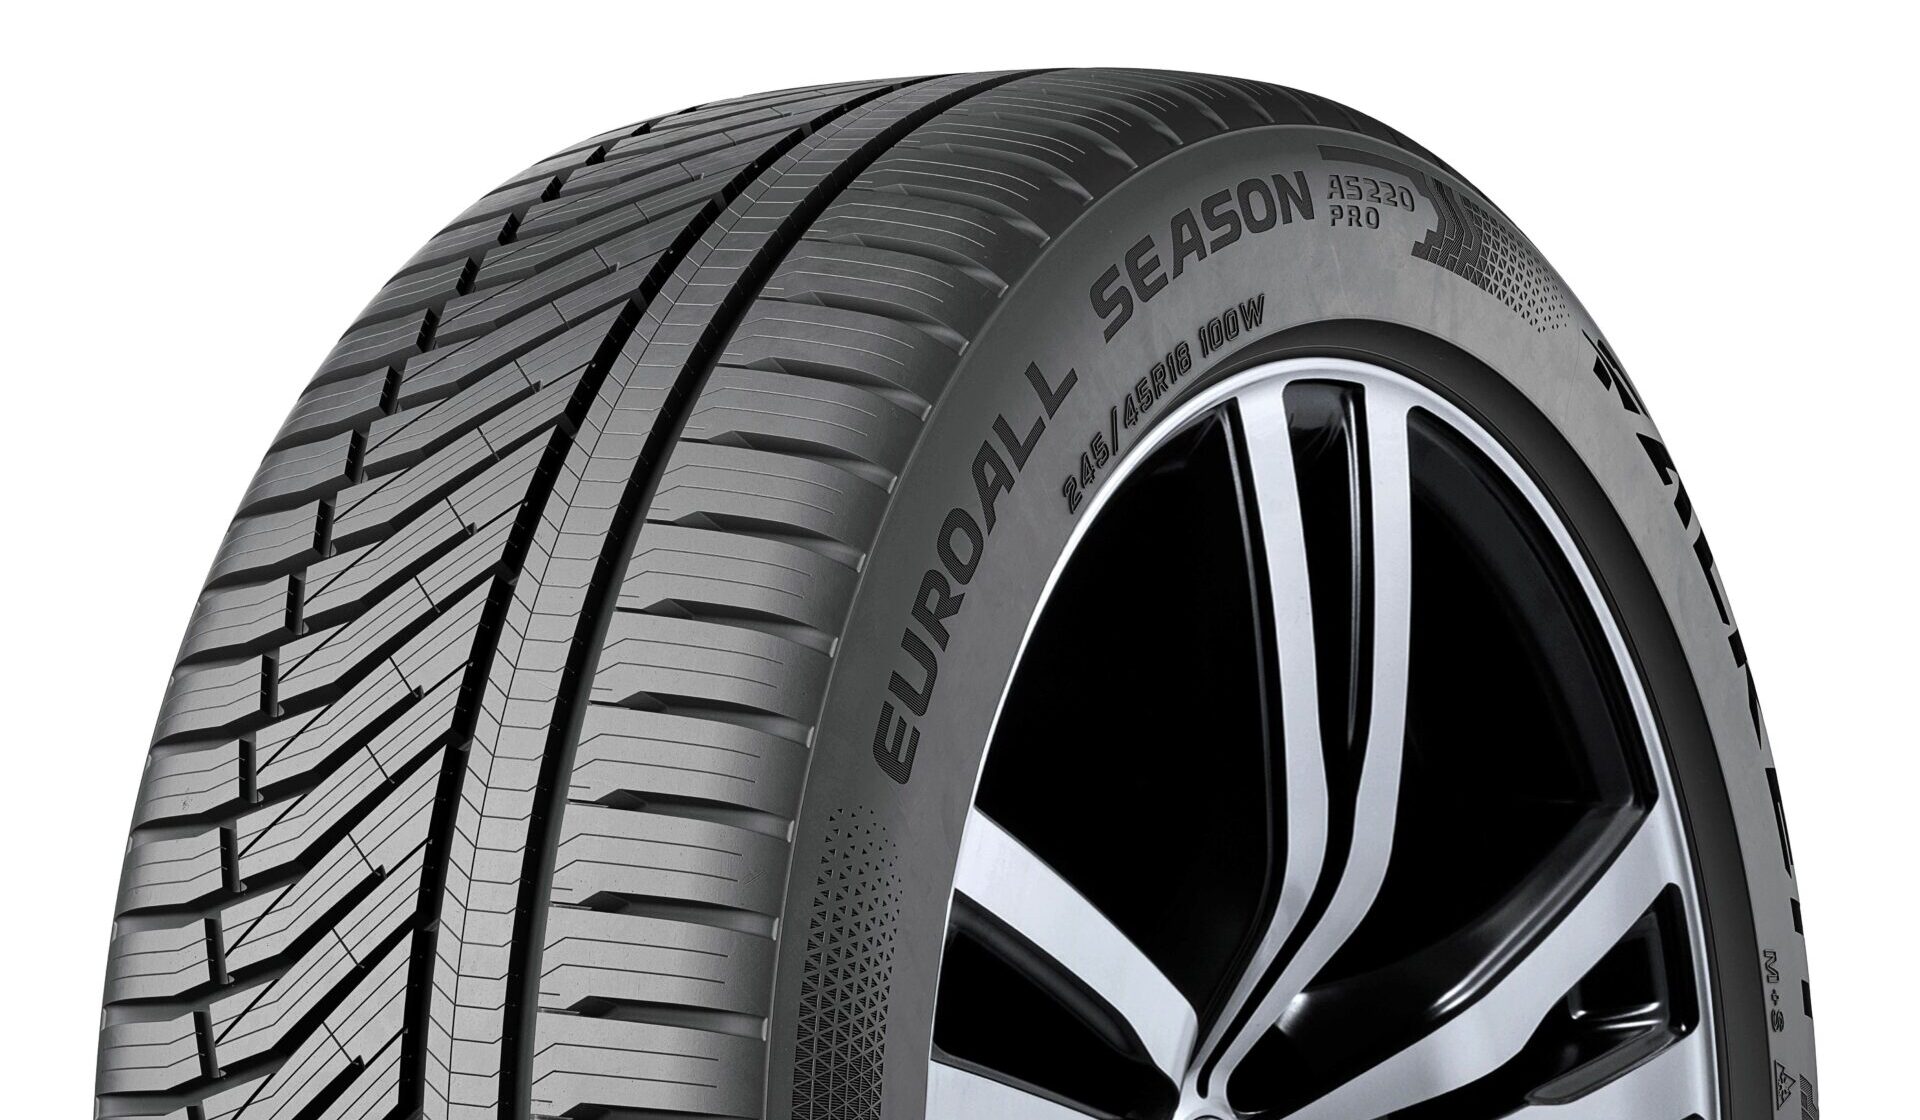 More Falken all-season, winter tyres sizes now available